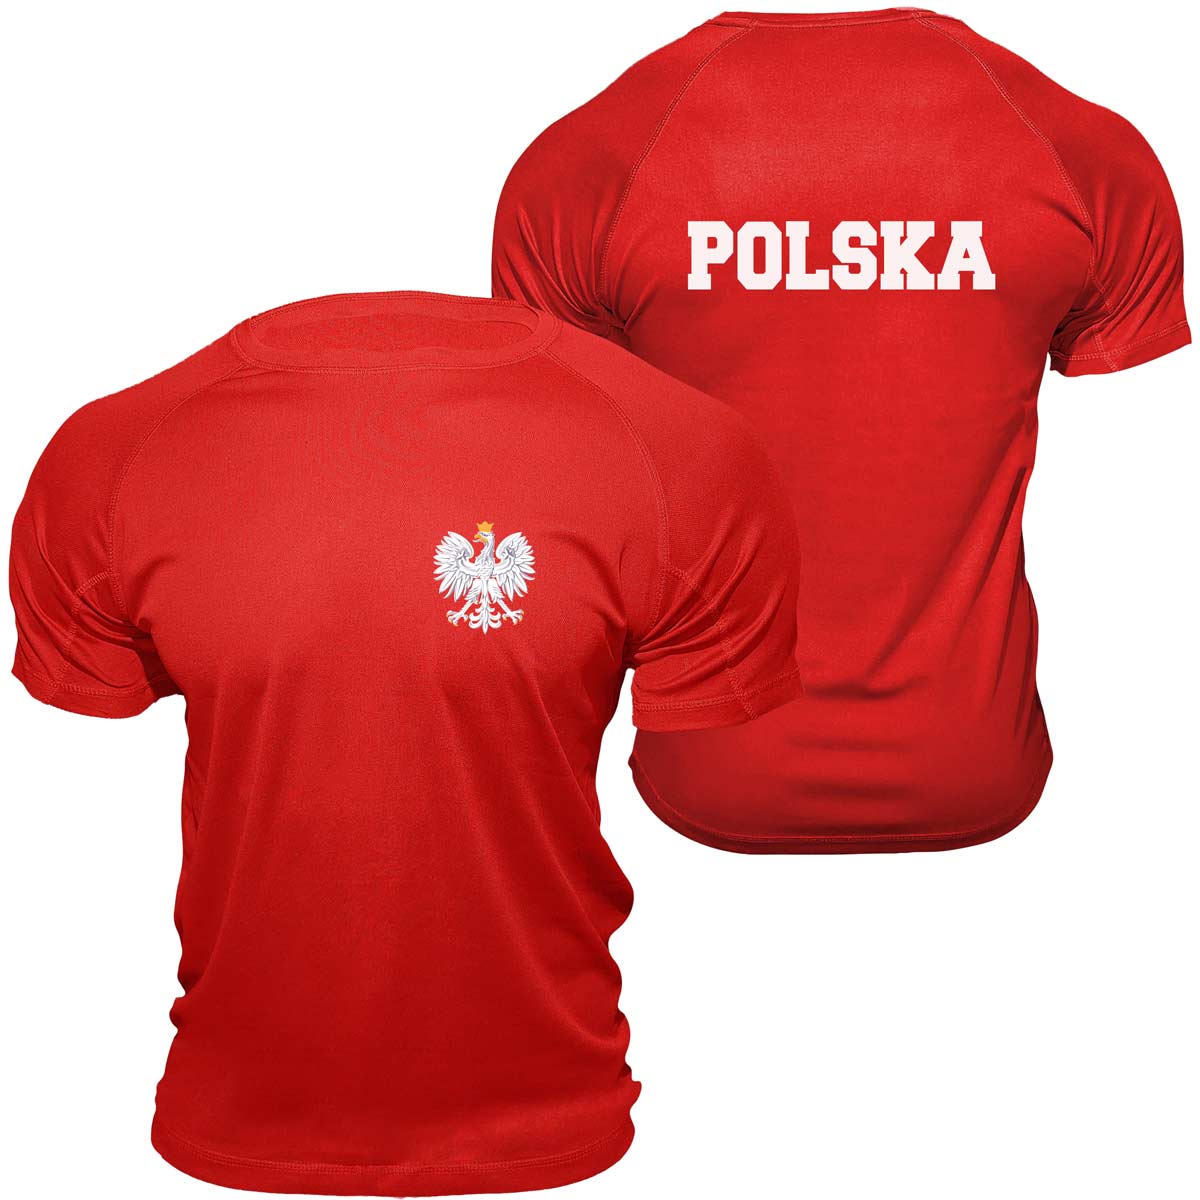 koszulka termoaktywna polska koszulka z napisem polska czerwona